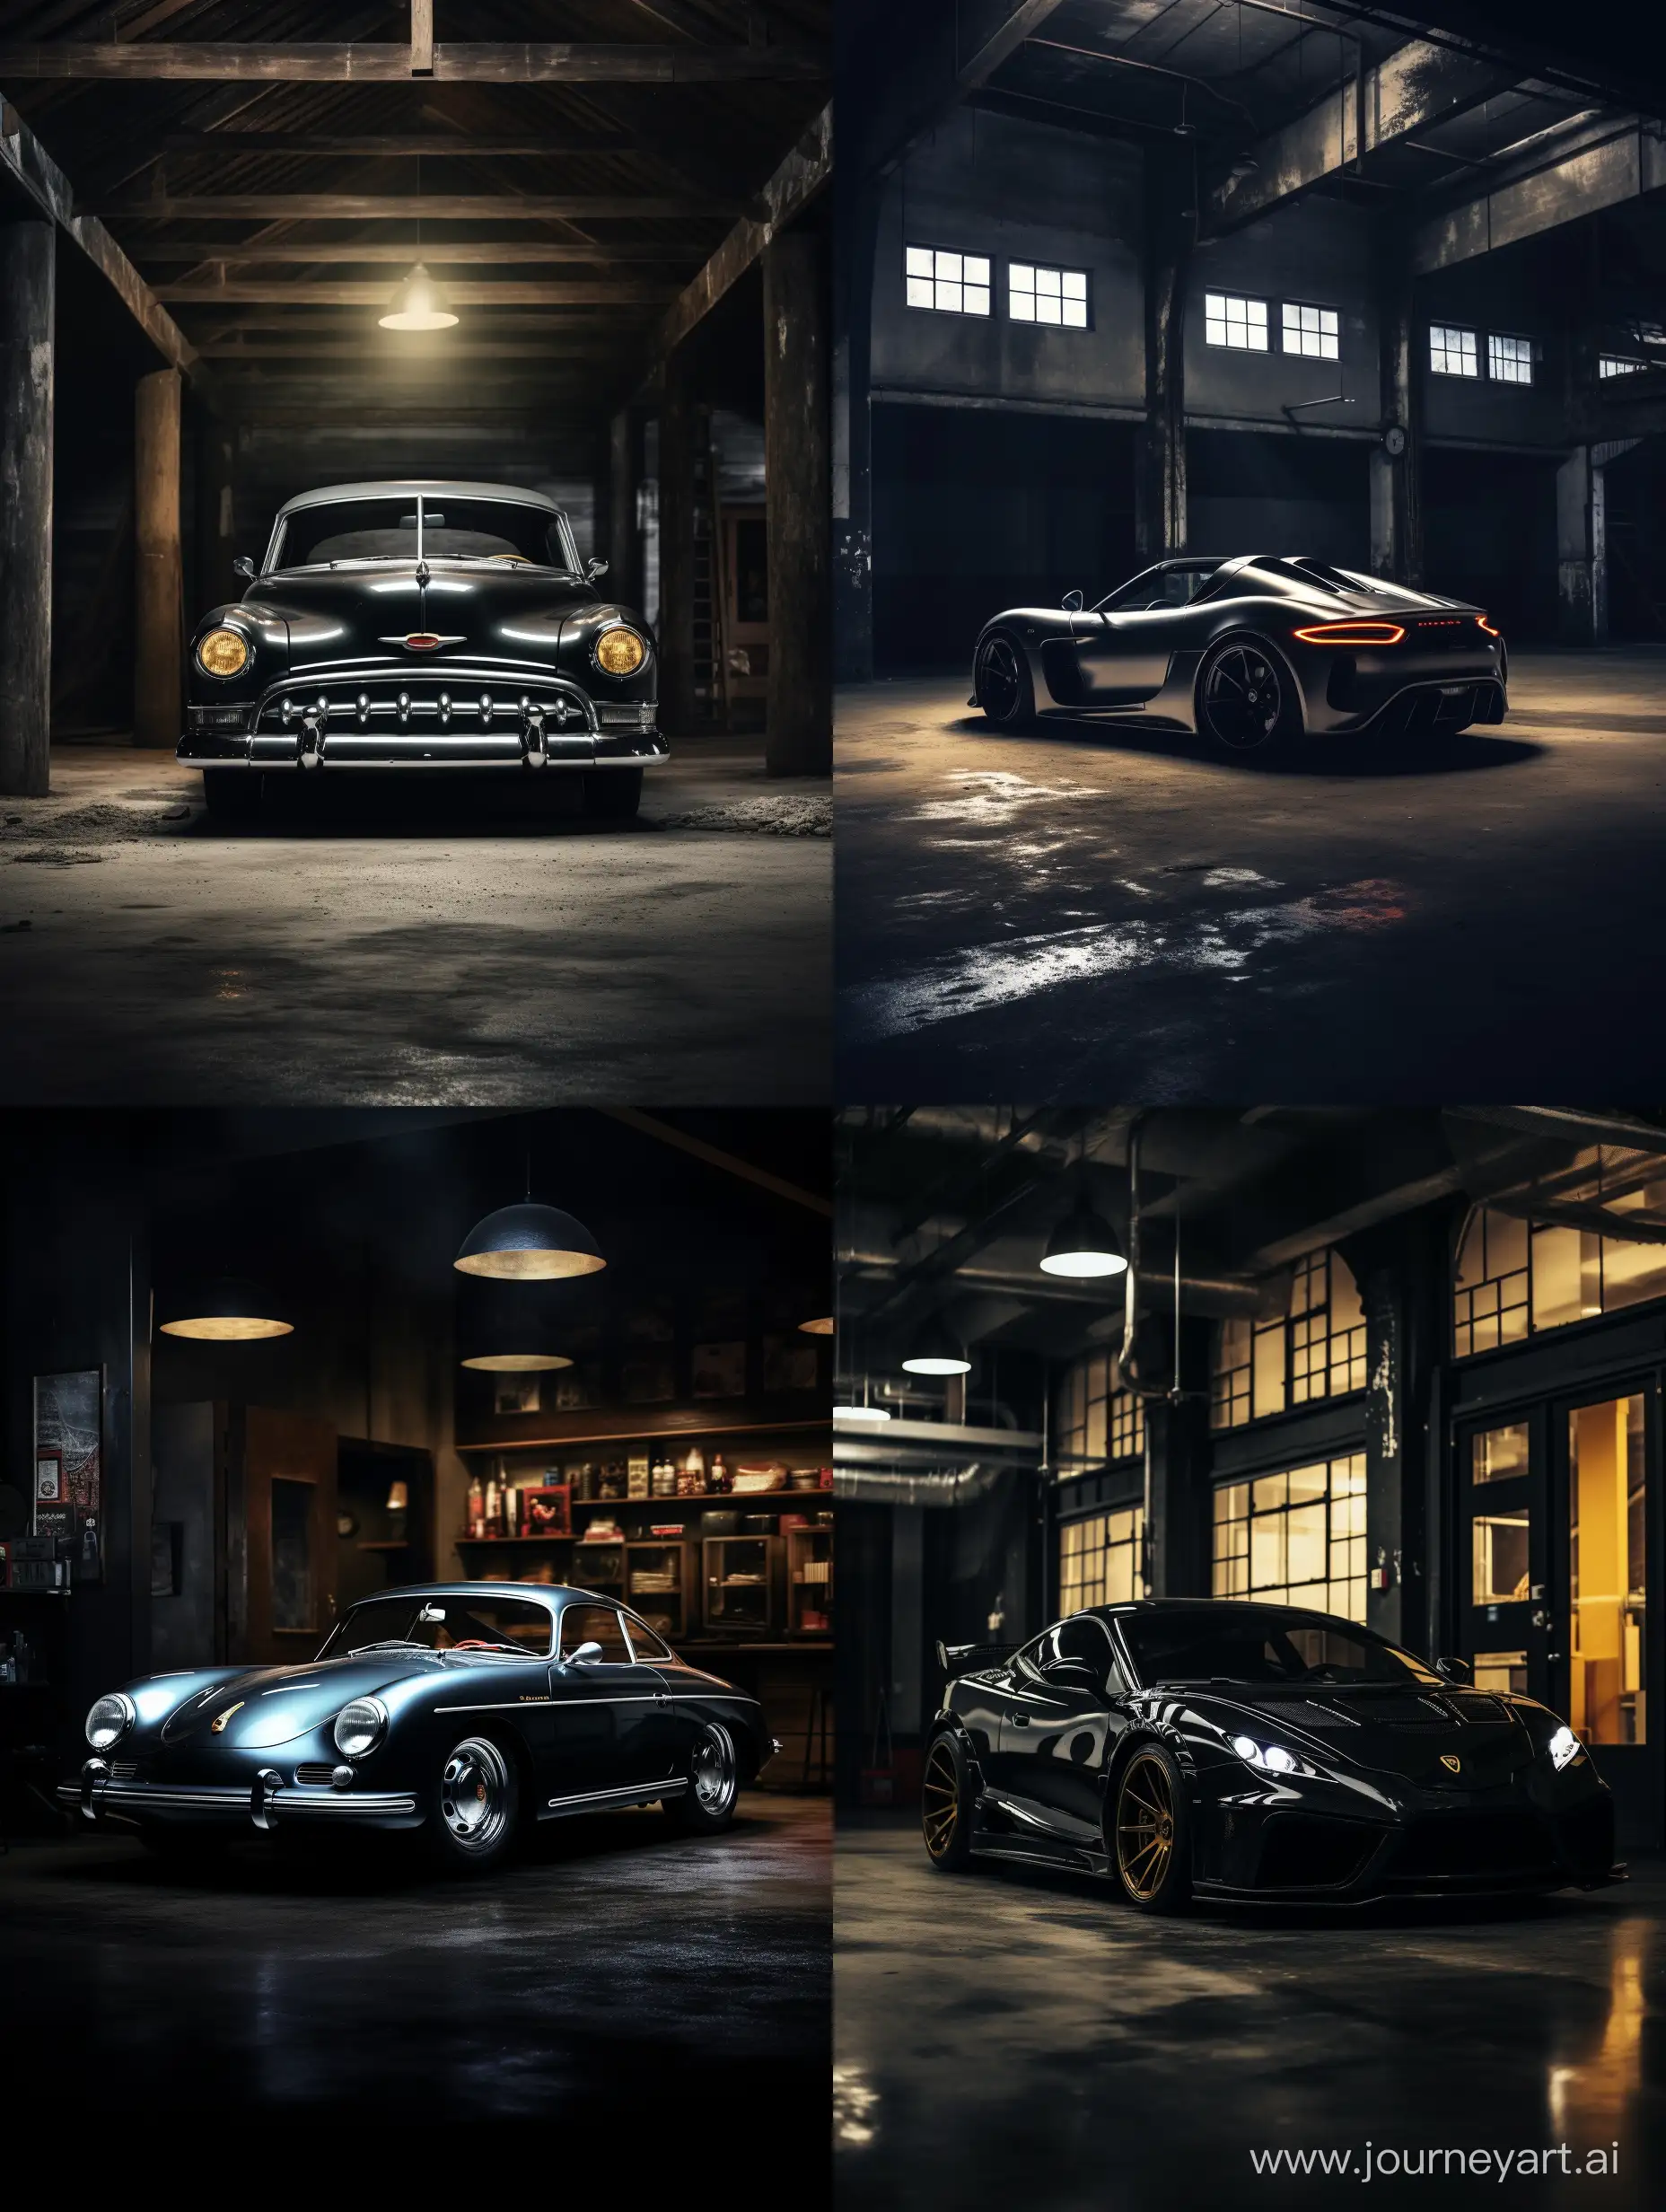 Sleek-Car-Silhouette-in-a-Stylish-Dark-Garage-Striking-Album-Cover-Photo